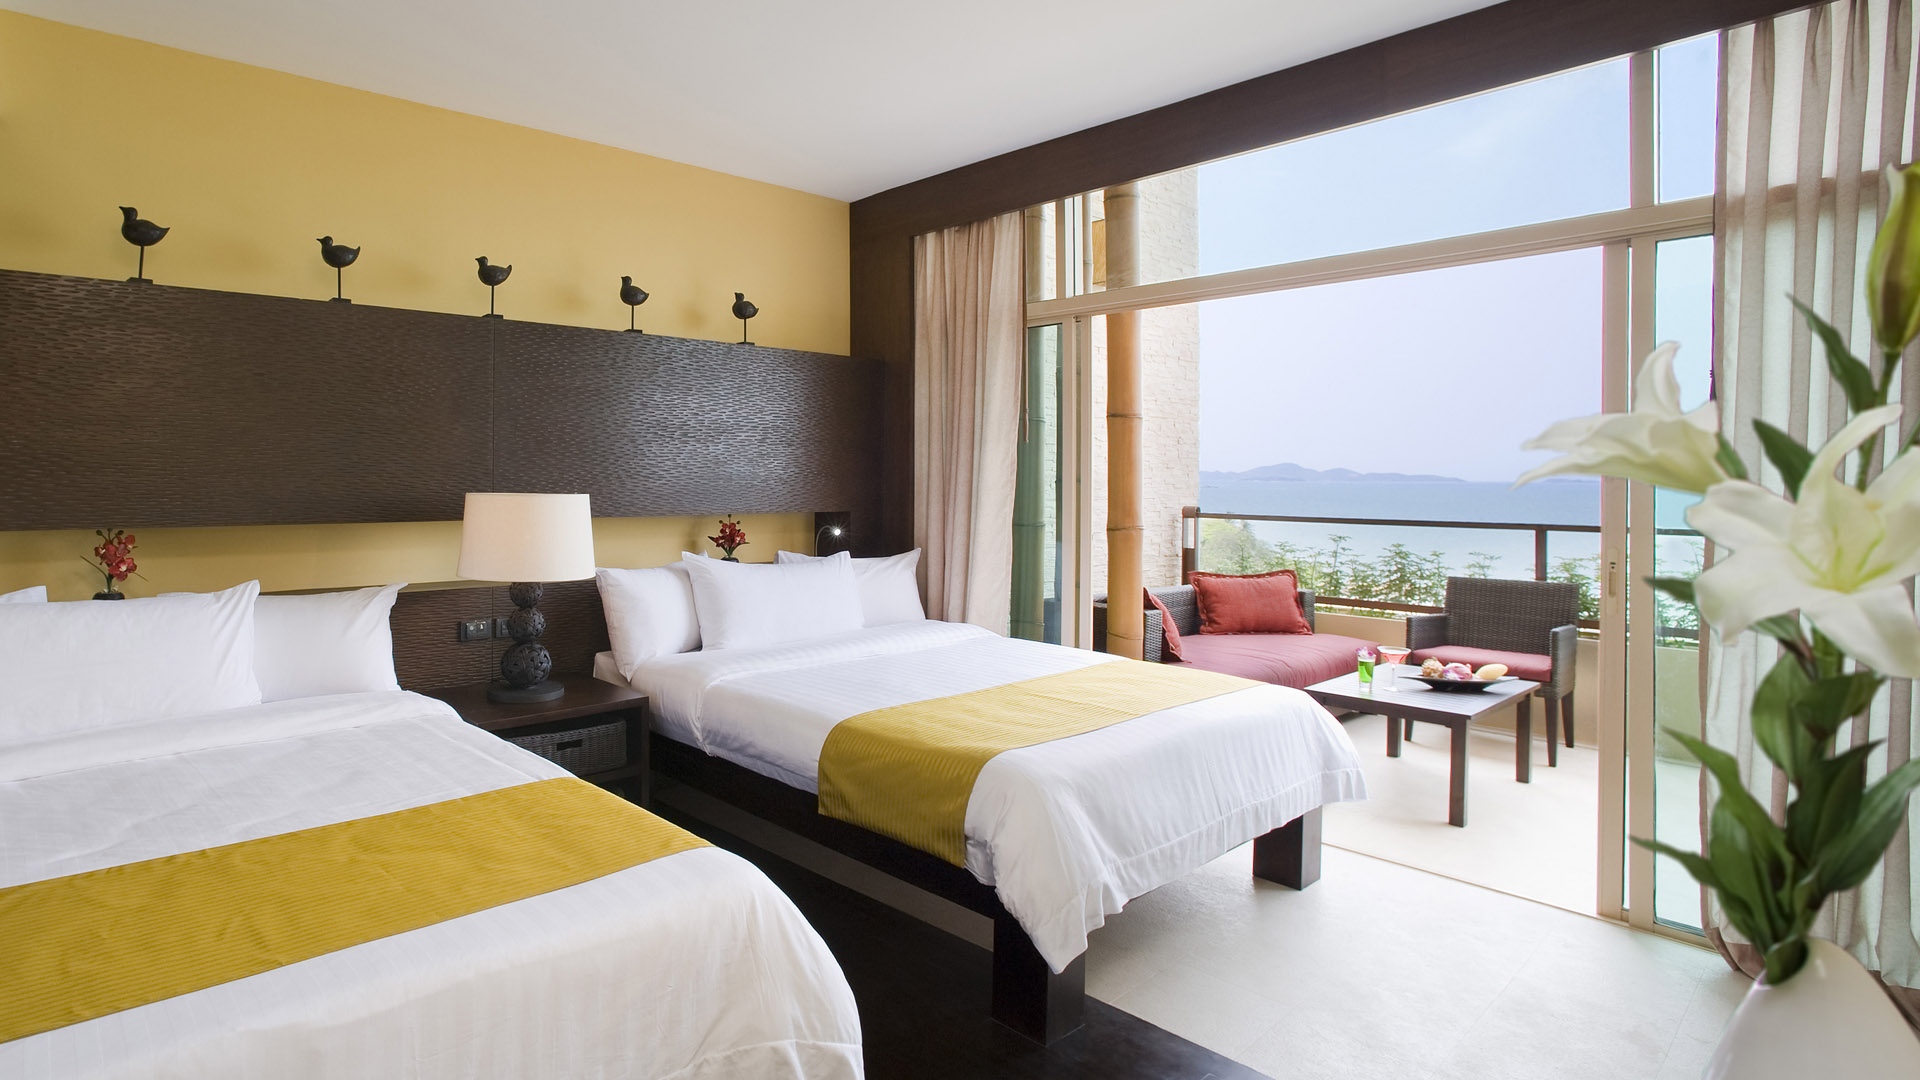 Hotel Room Bed Stylish Modern Wallpaper Background Full HD 1080p